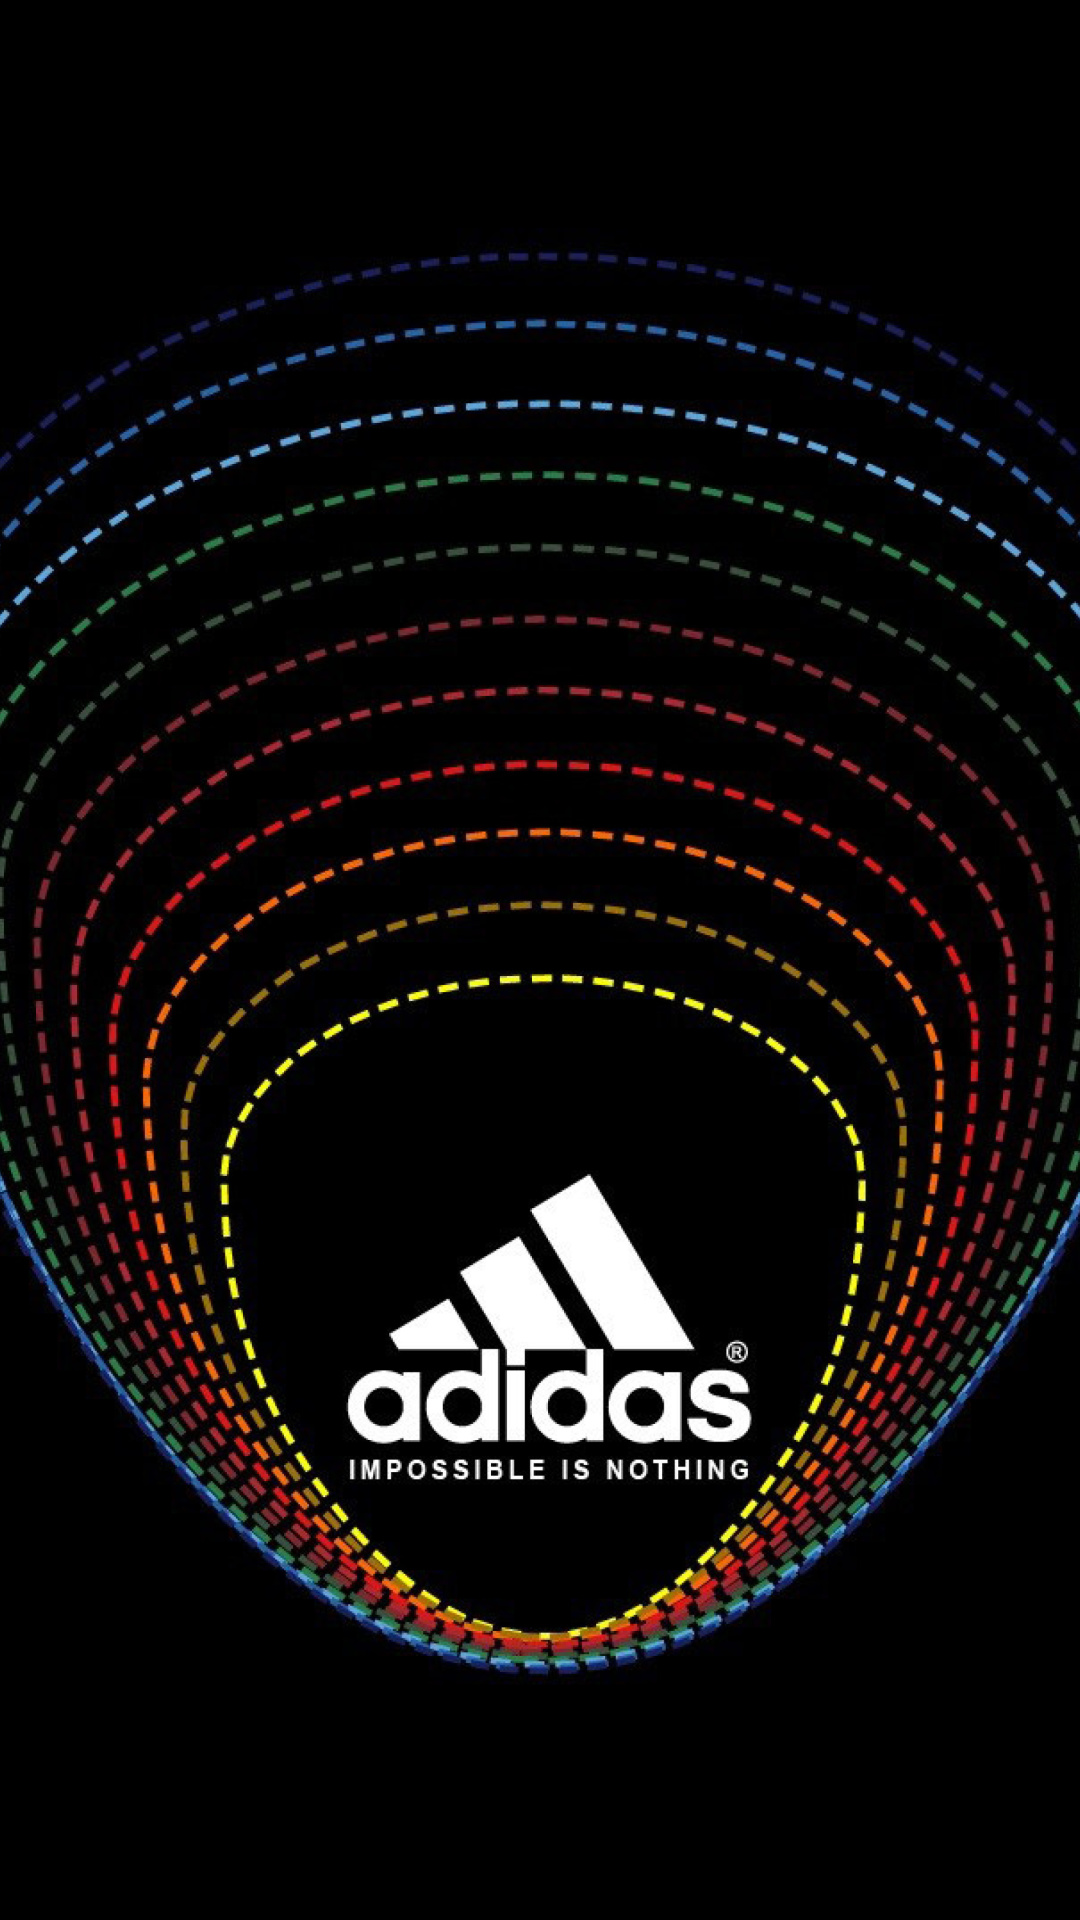 Sfondi Adidas Tagline, Impossible is Nothing 1080x1920